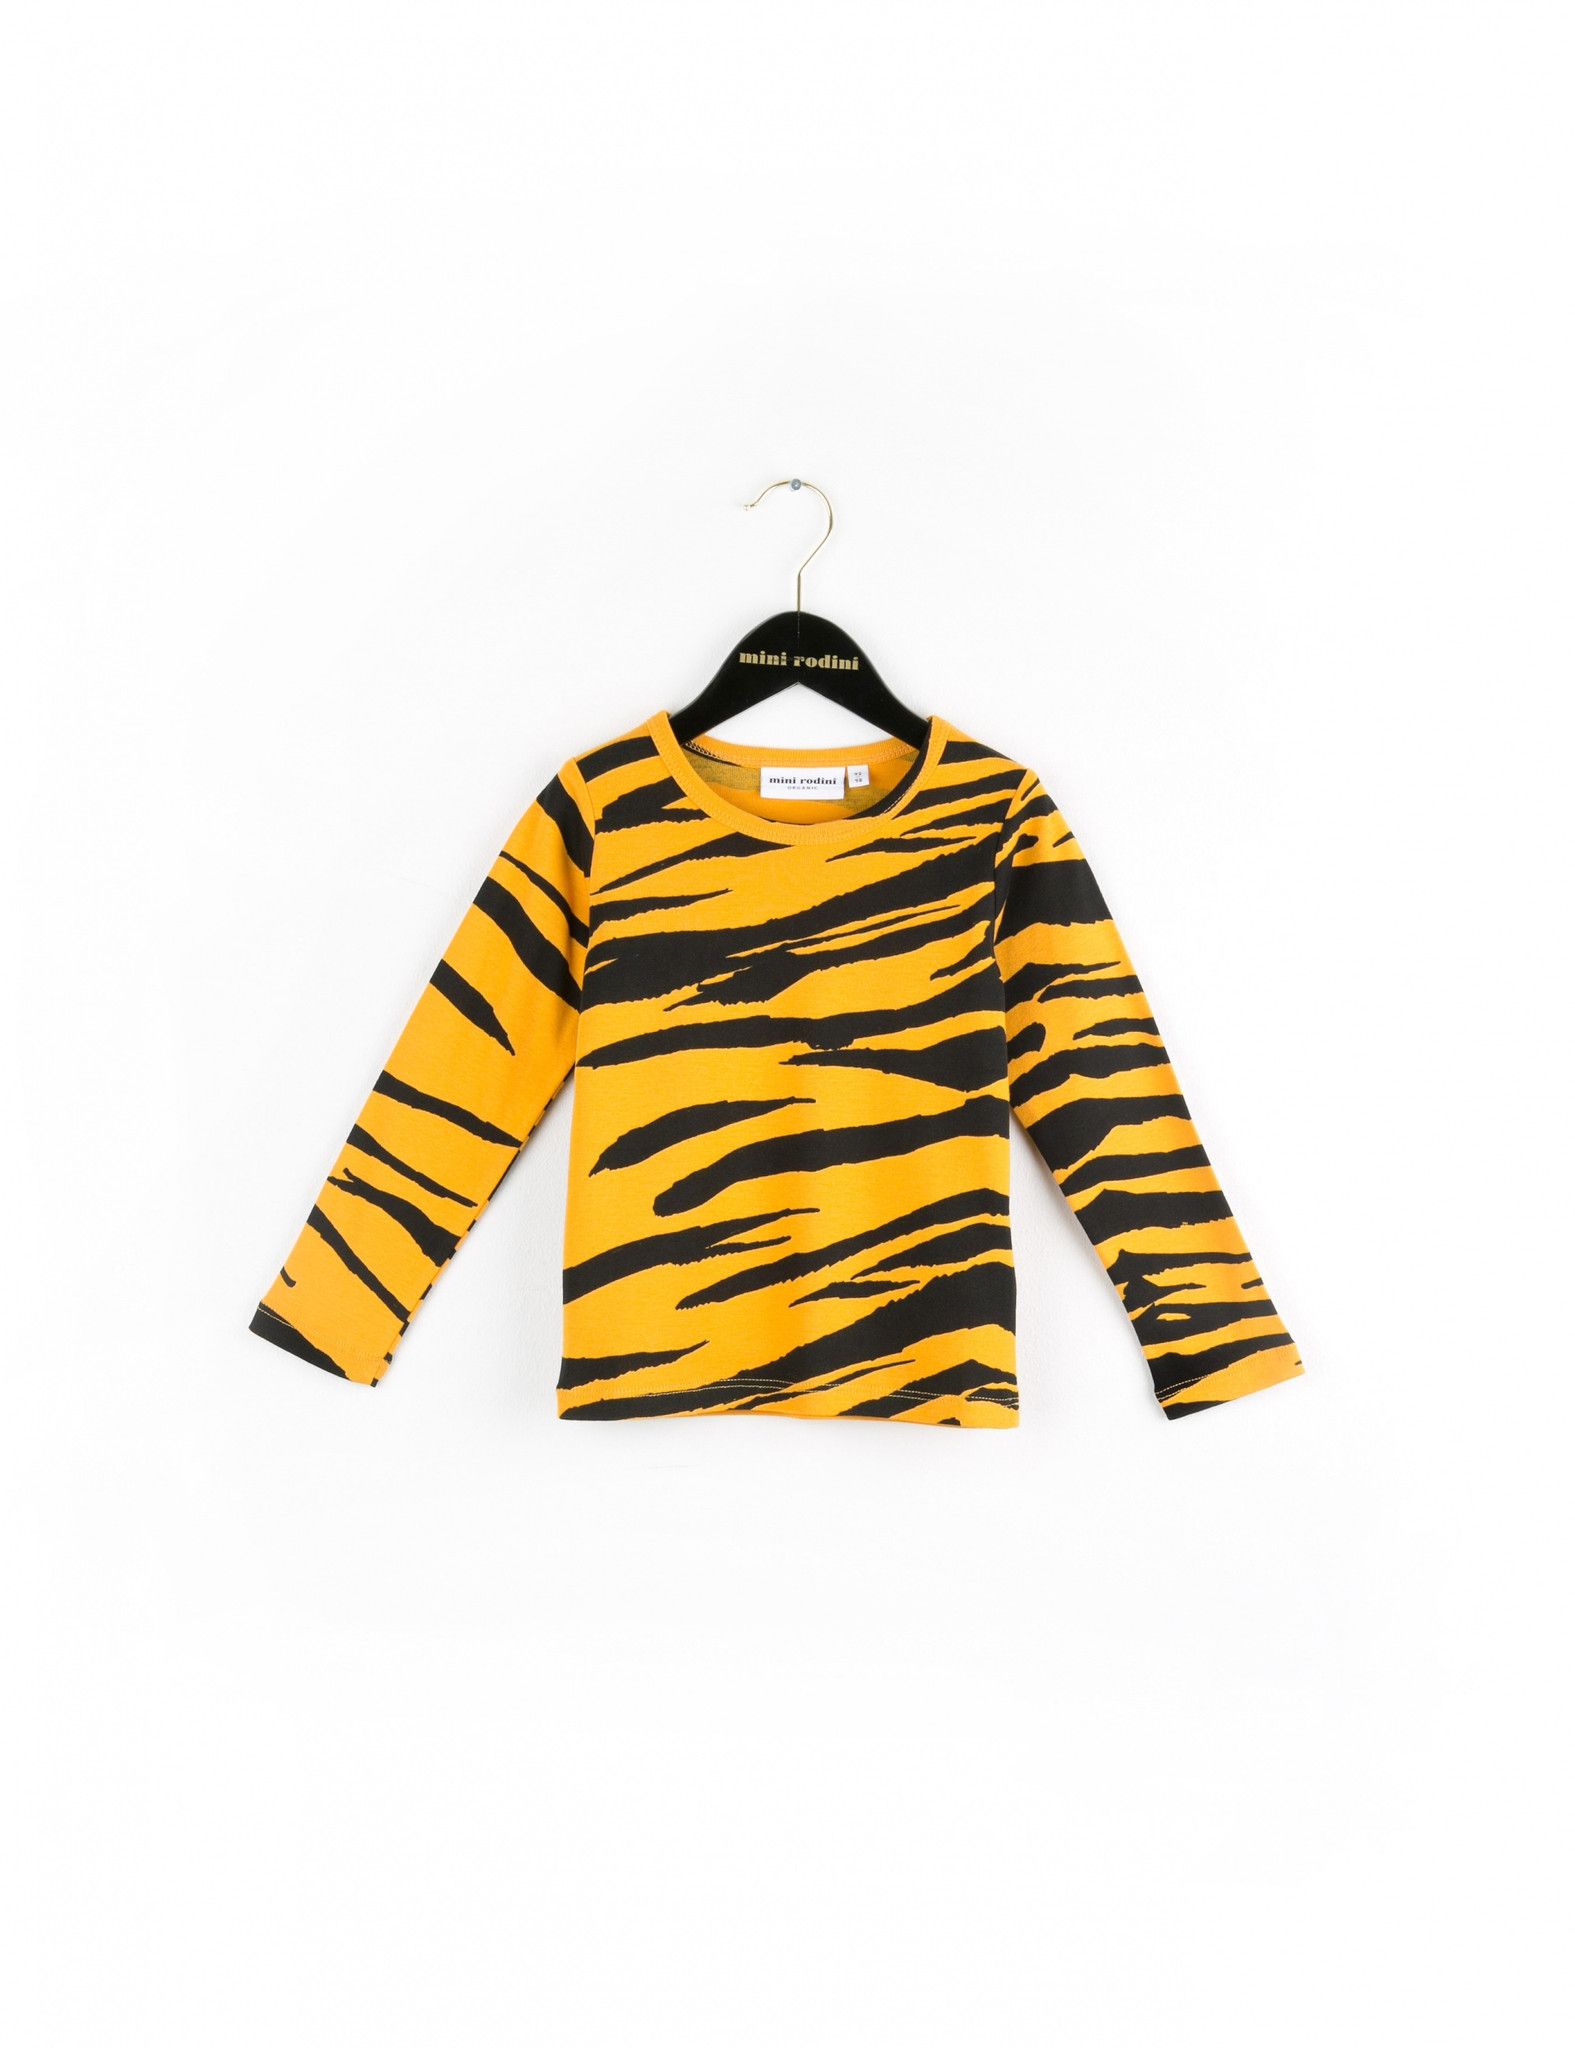 Tiger Stripes Orange Long Sleeve T-Shirt - CÉMAROSE | Children's Fashion Store - 1